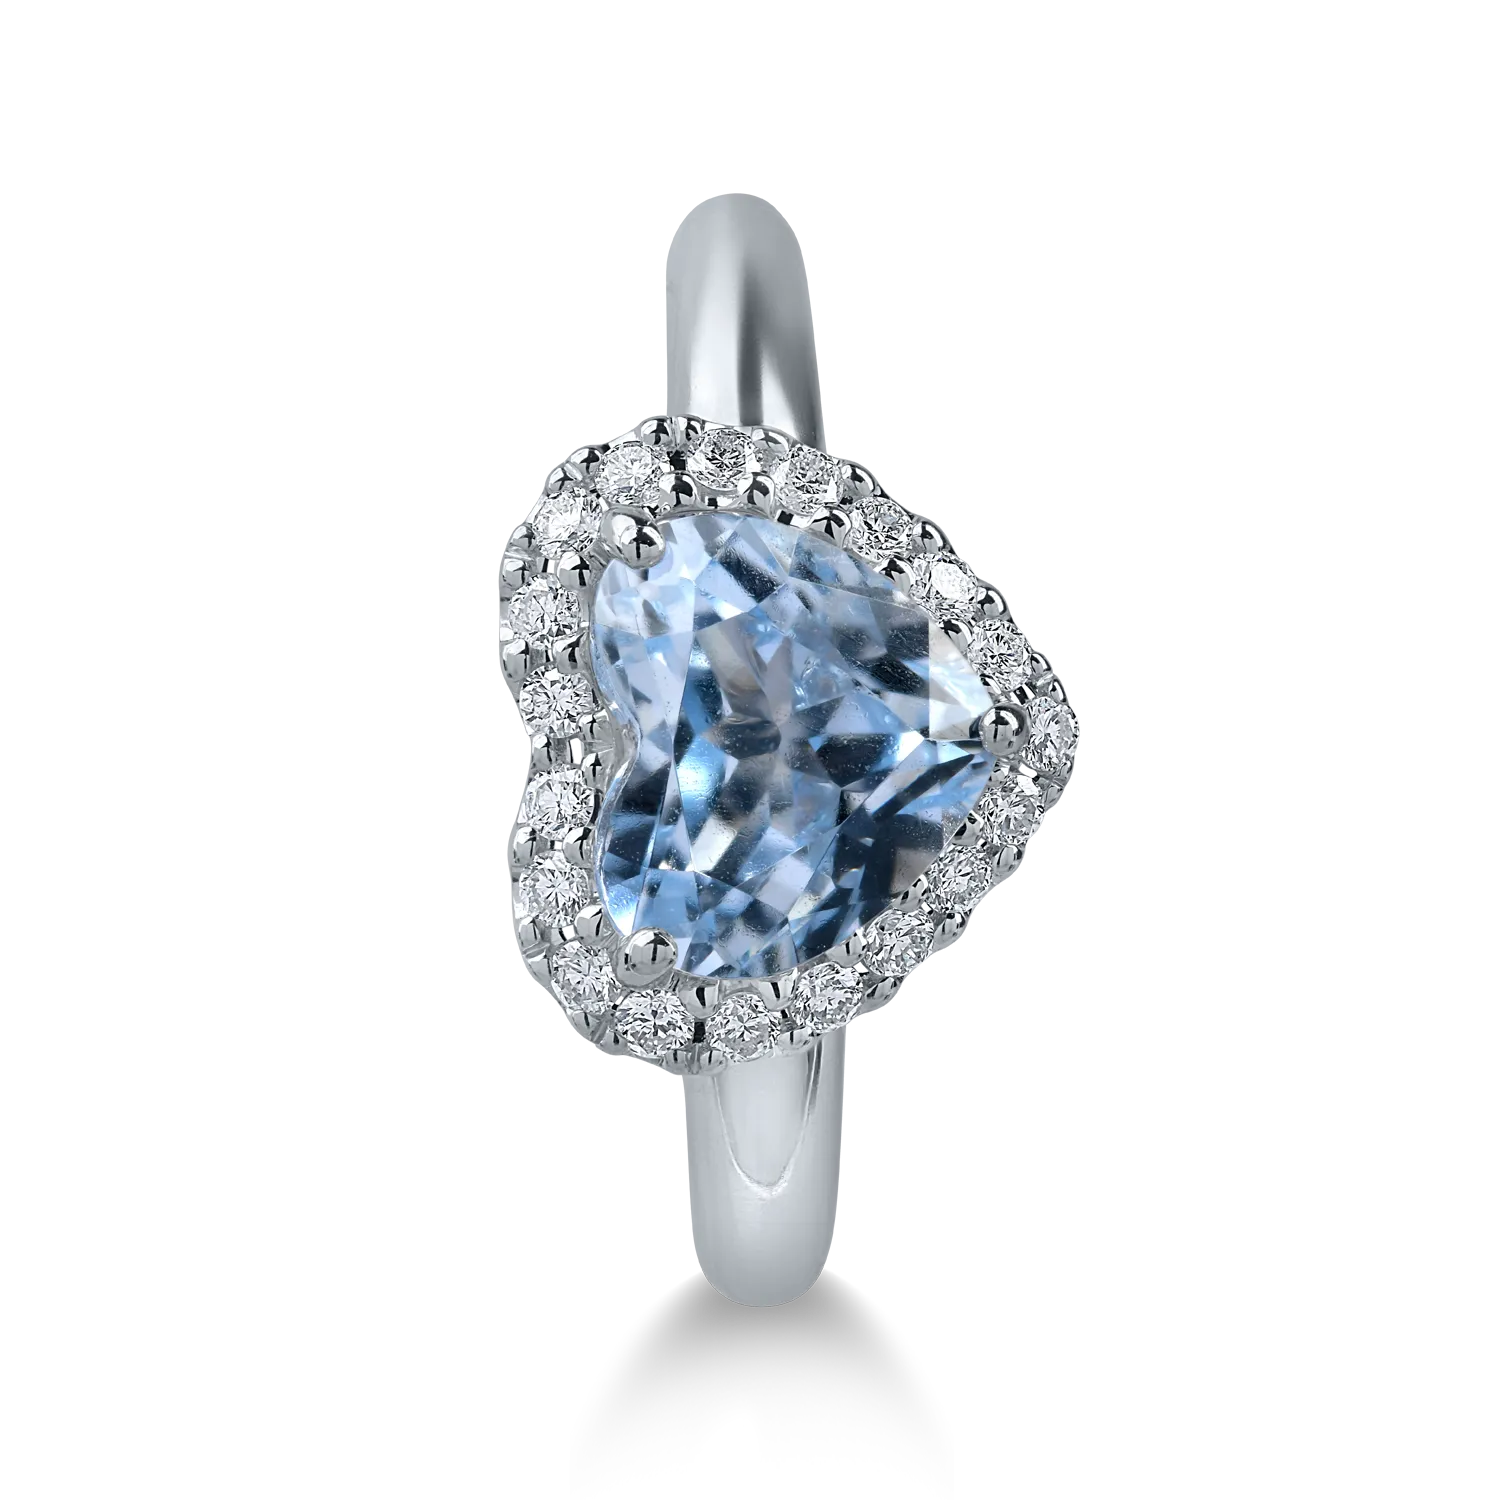 White gold heart ring with 1.72ct aquamarine and 0.19ct diamonds